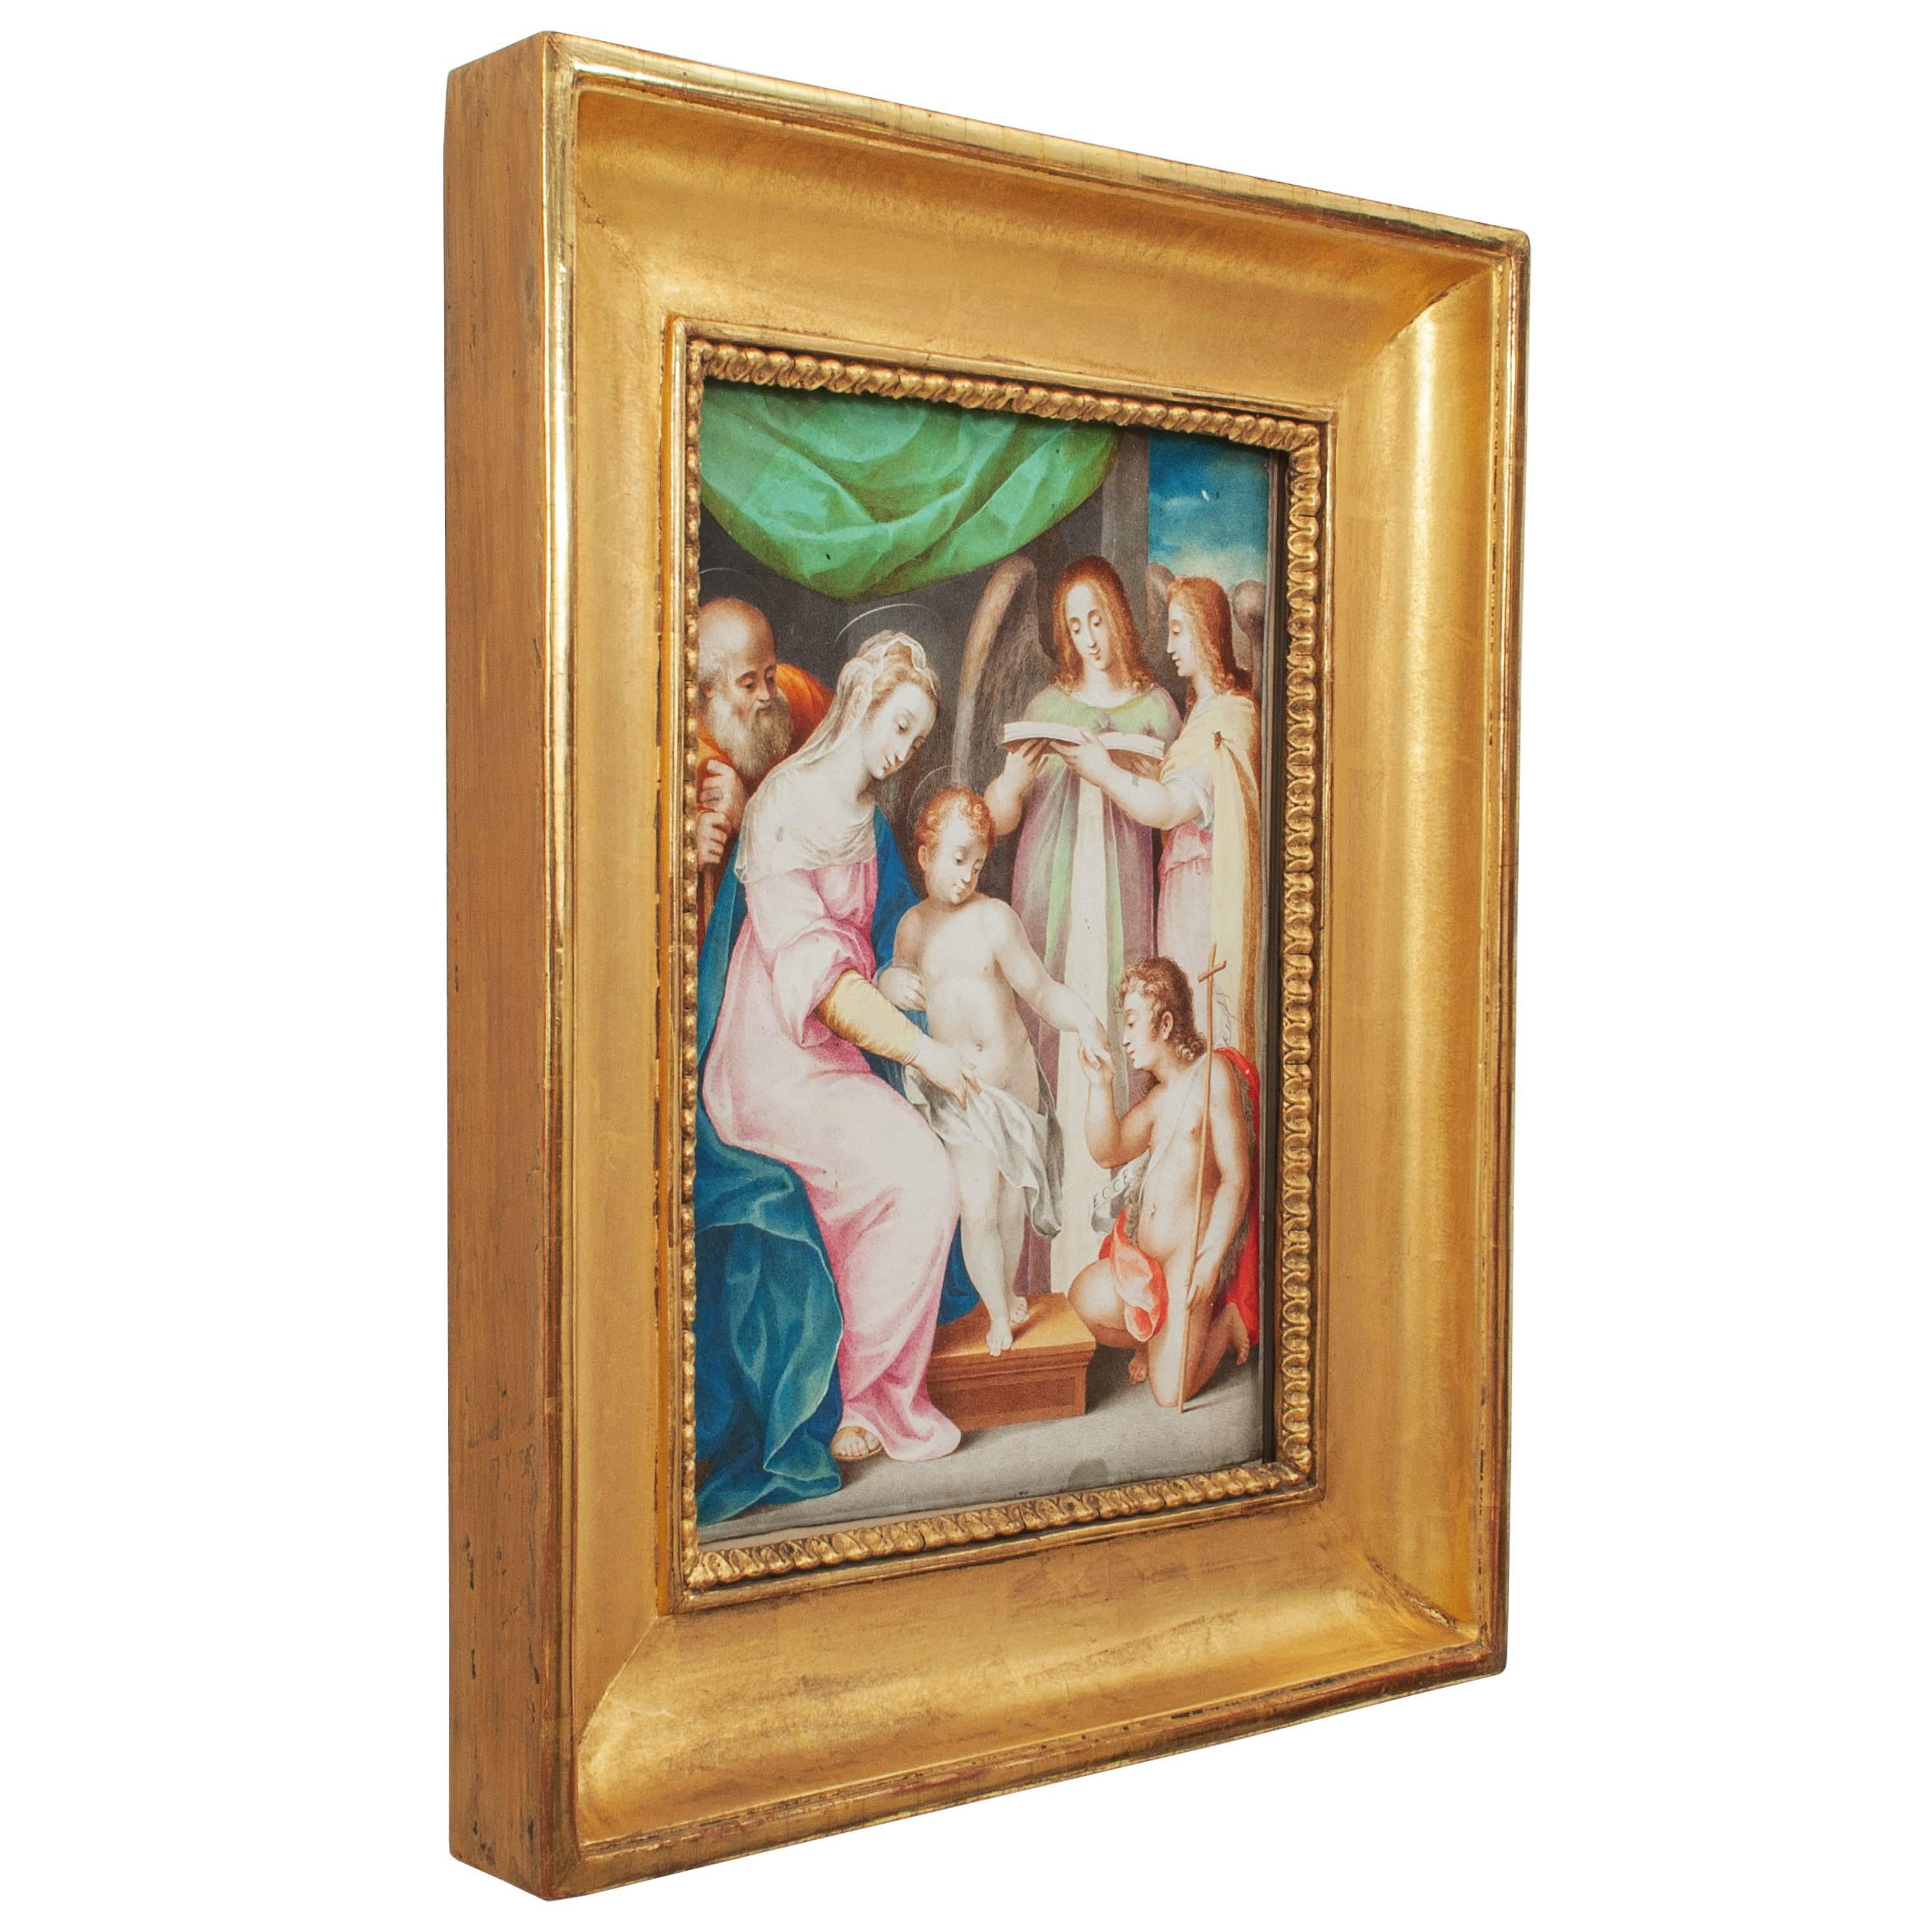 Tempera sur parchemin de la Renaissance italienne de Giuseppe Cesari - Painting de GIUSEPPE CESARI IL CAVALIER D'ARPINO